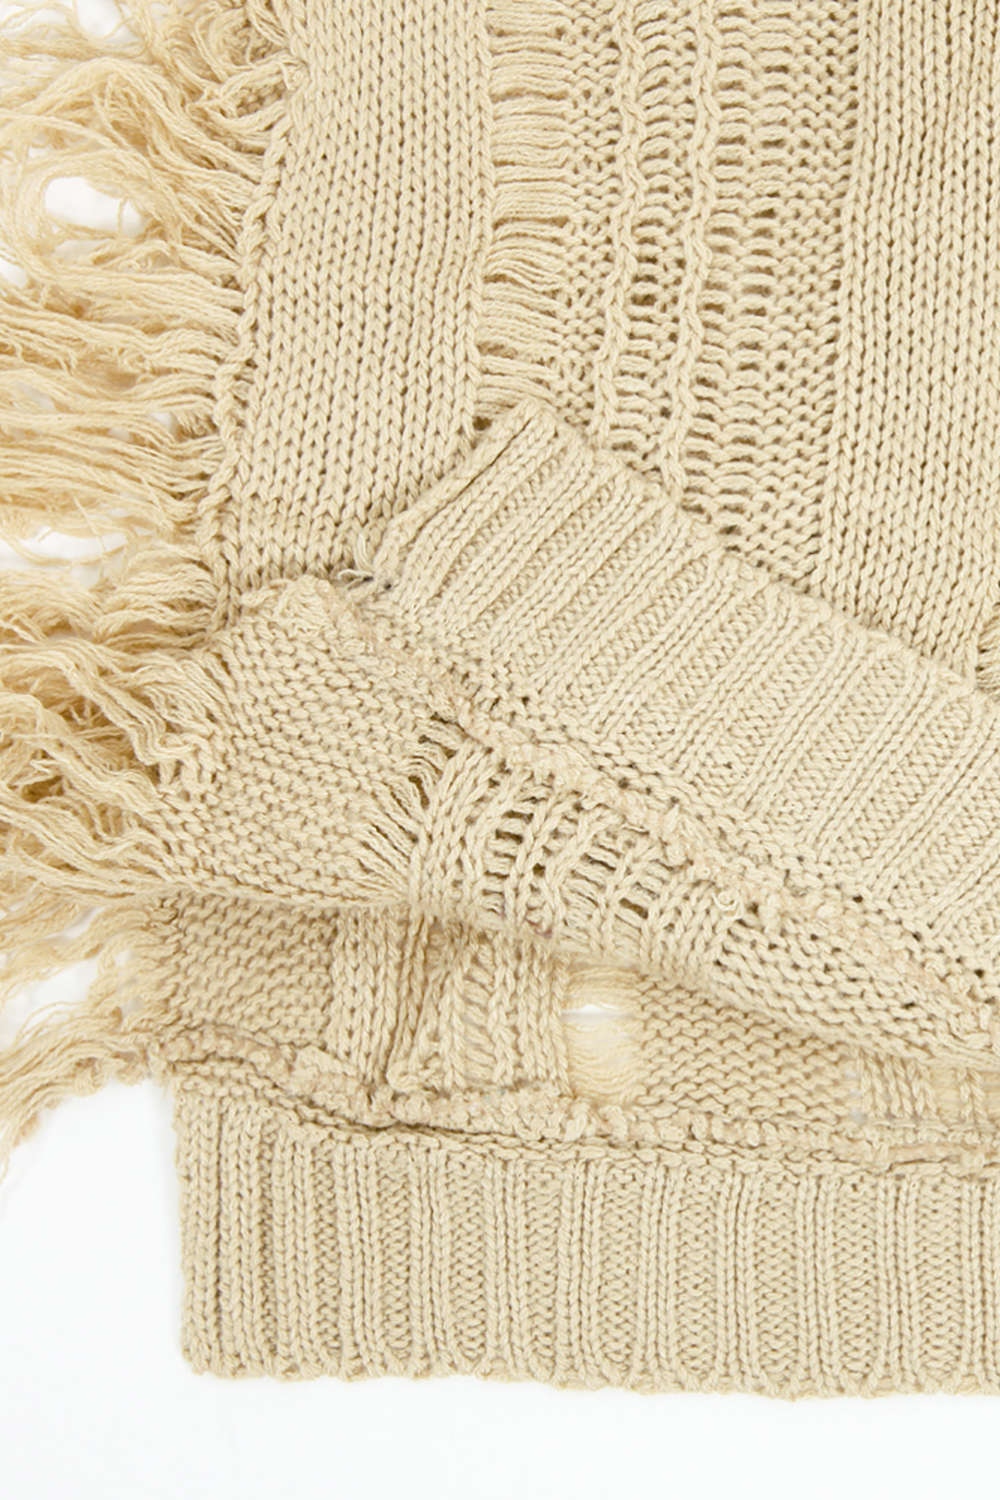 Iyasson Women Fashion Batwing Tassel Cape Poncho Knit Top Sweater